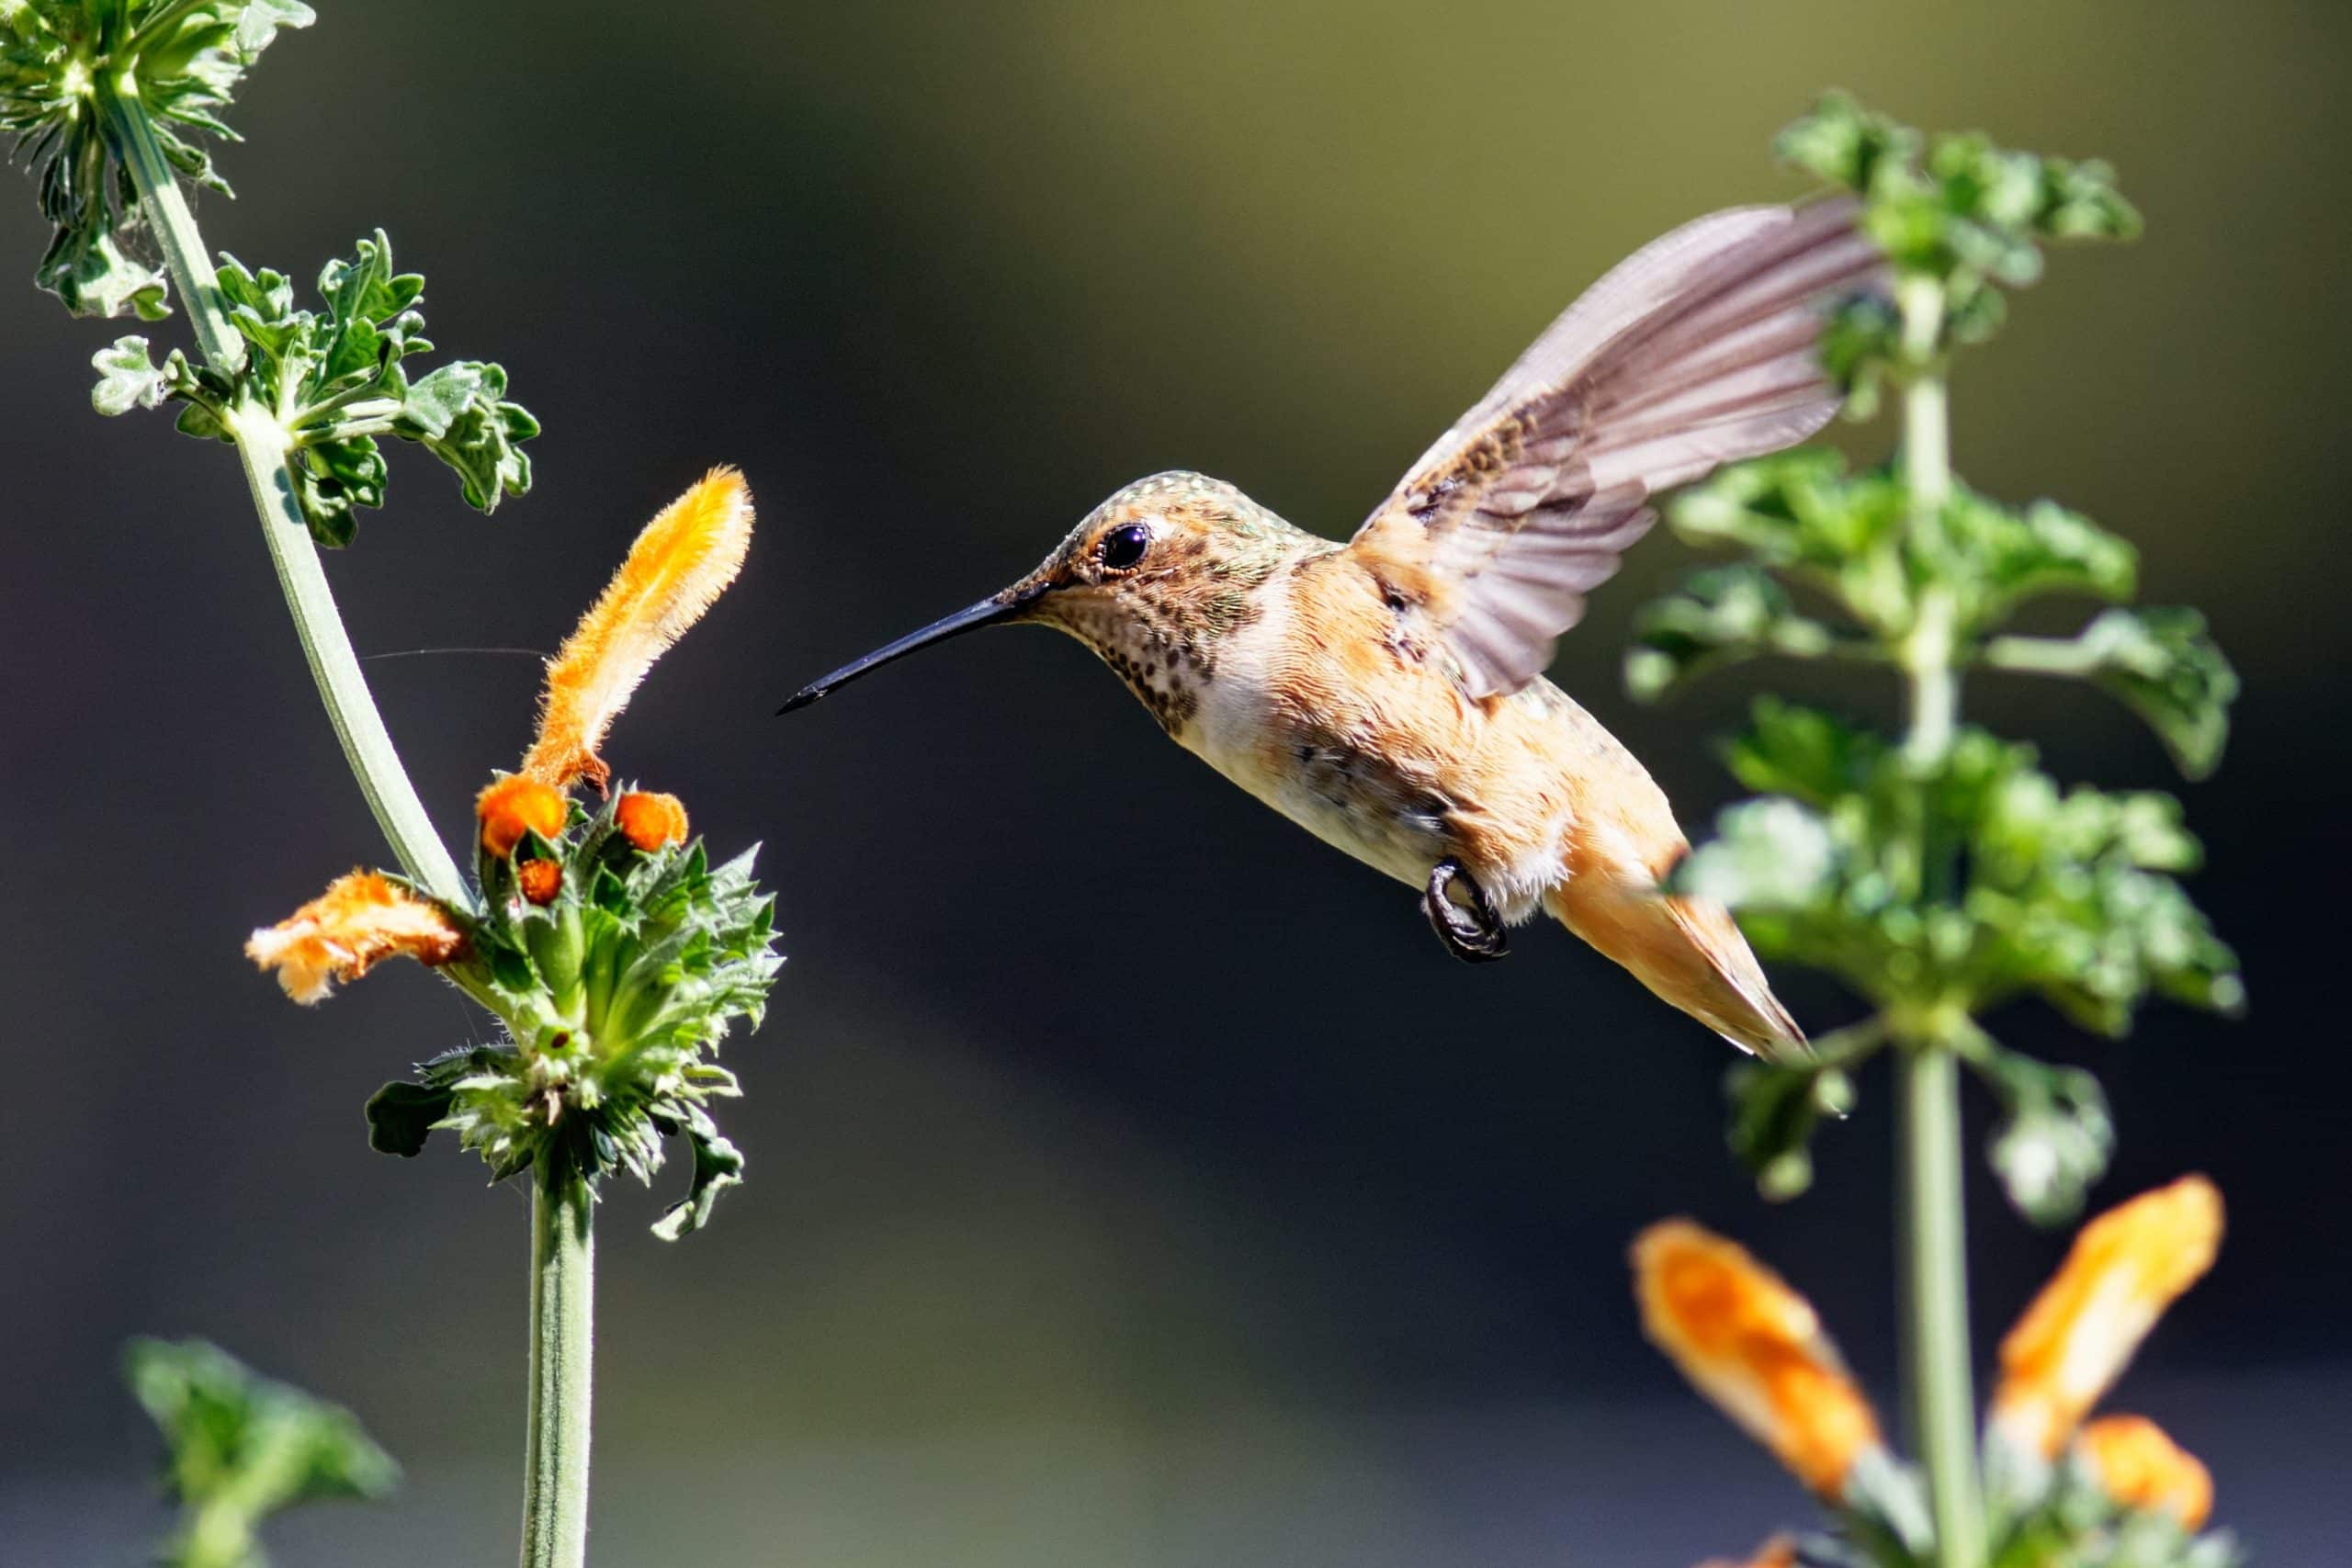 An orange-bodied hummingbird feeding from an orange plant